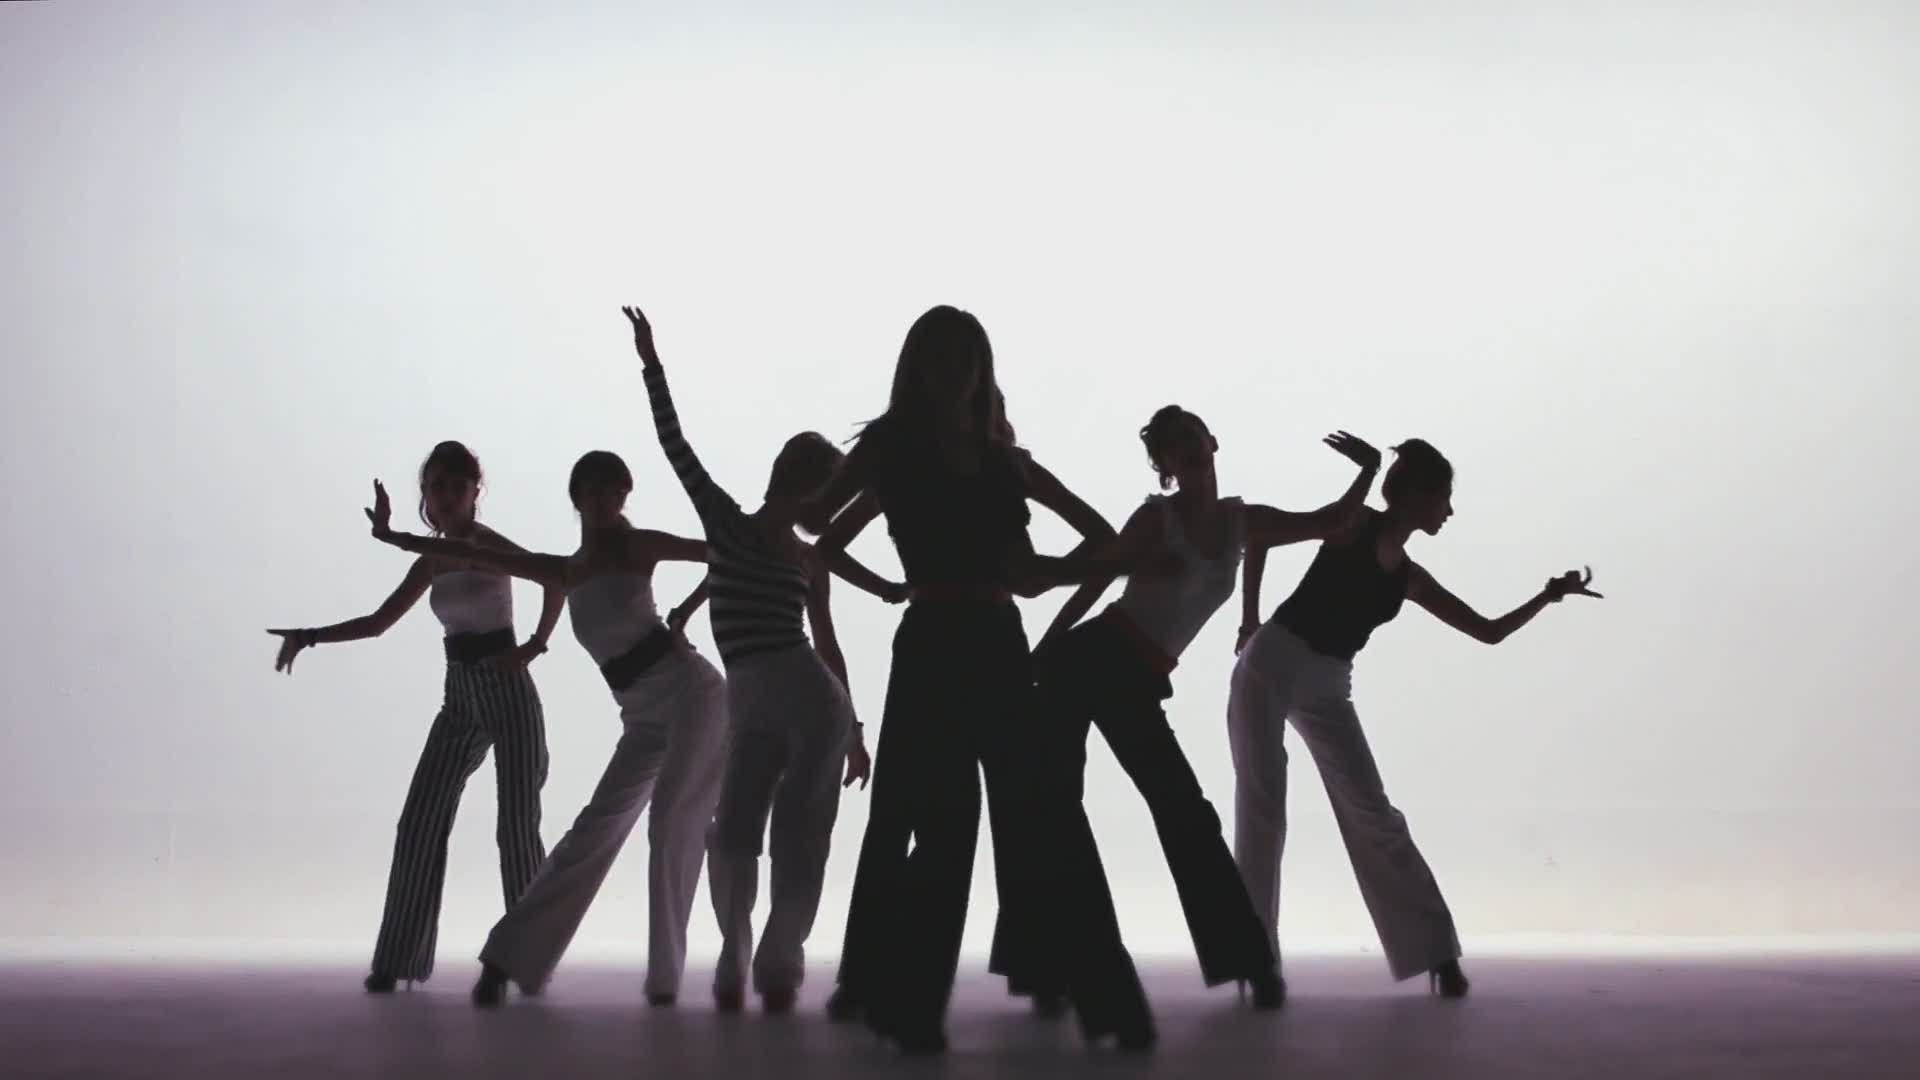 Nine Muses Kpop K Pop Dance Pop Wallpapers Hd Desktop And Mobile Backgrounds